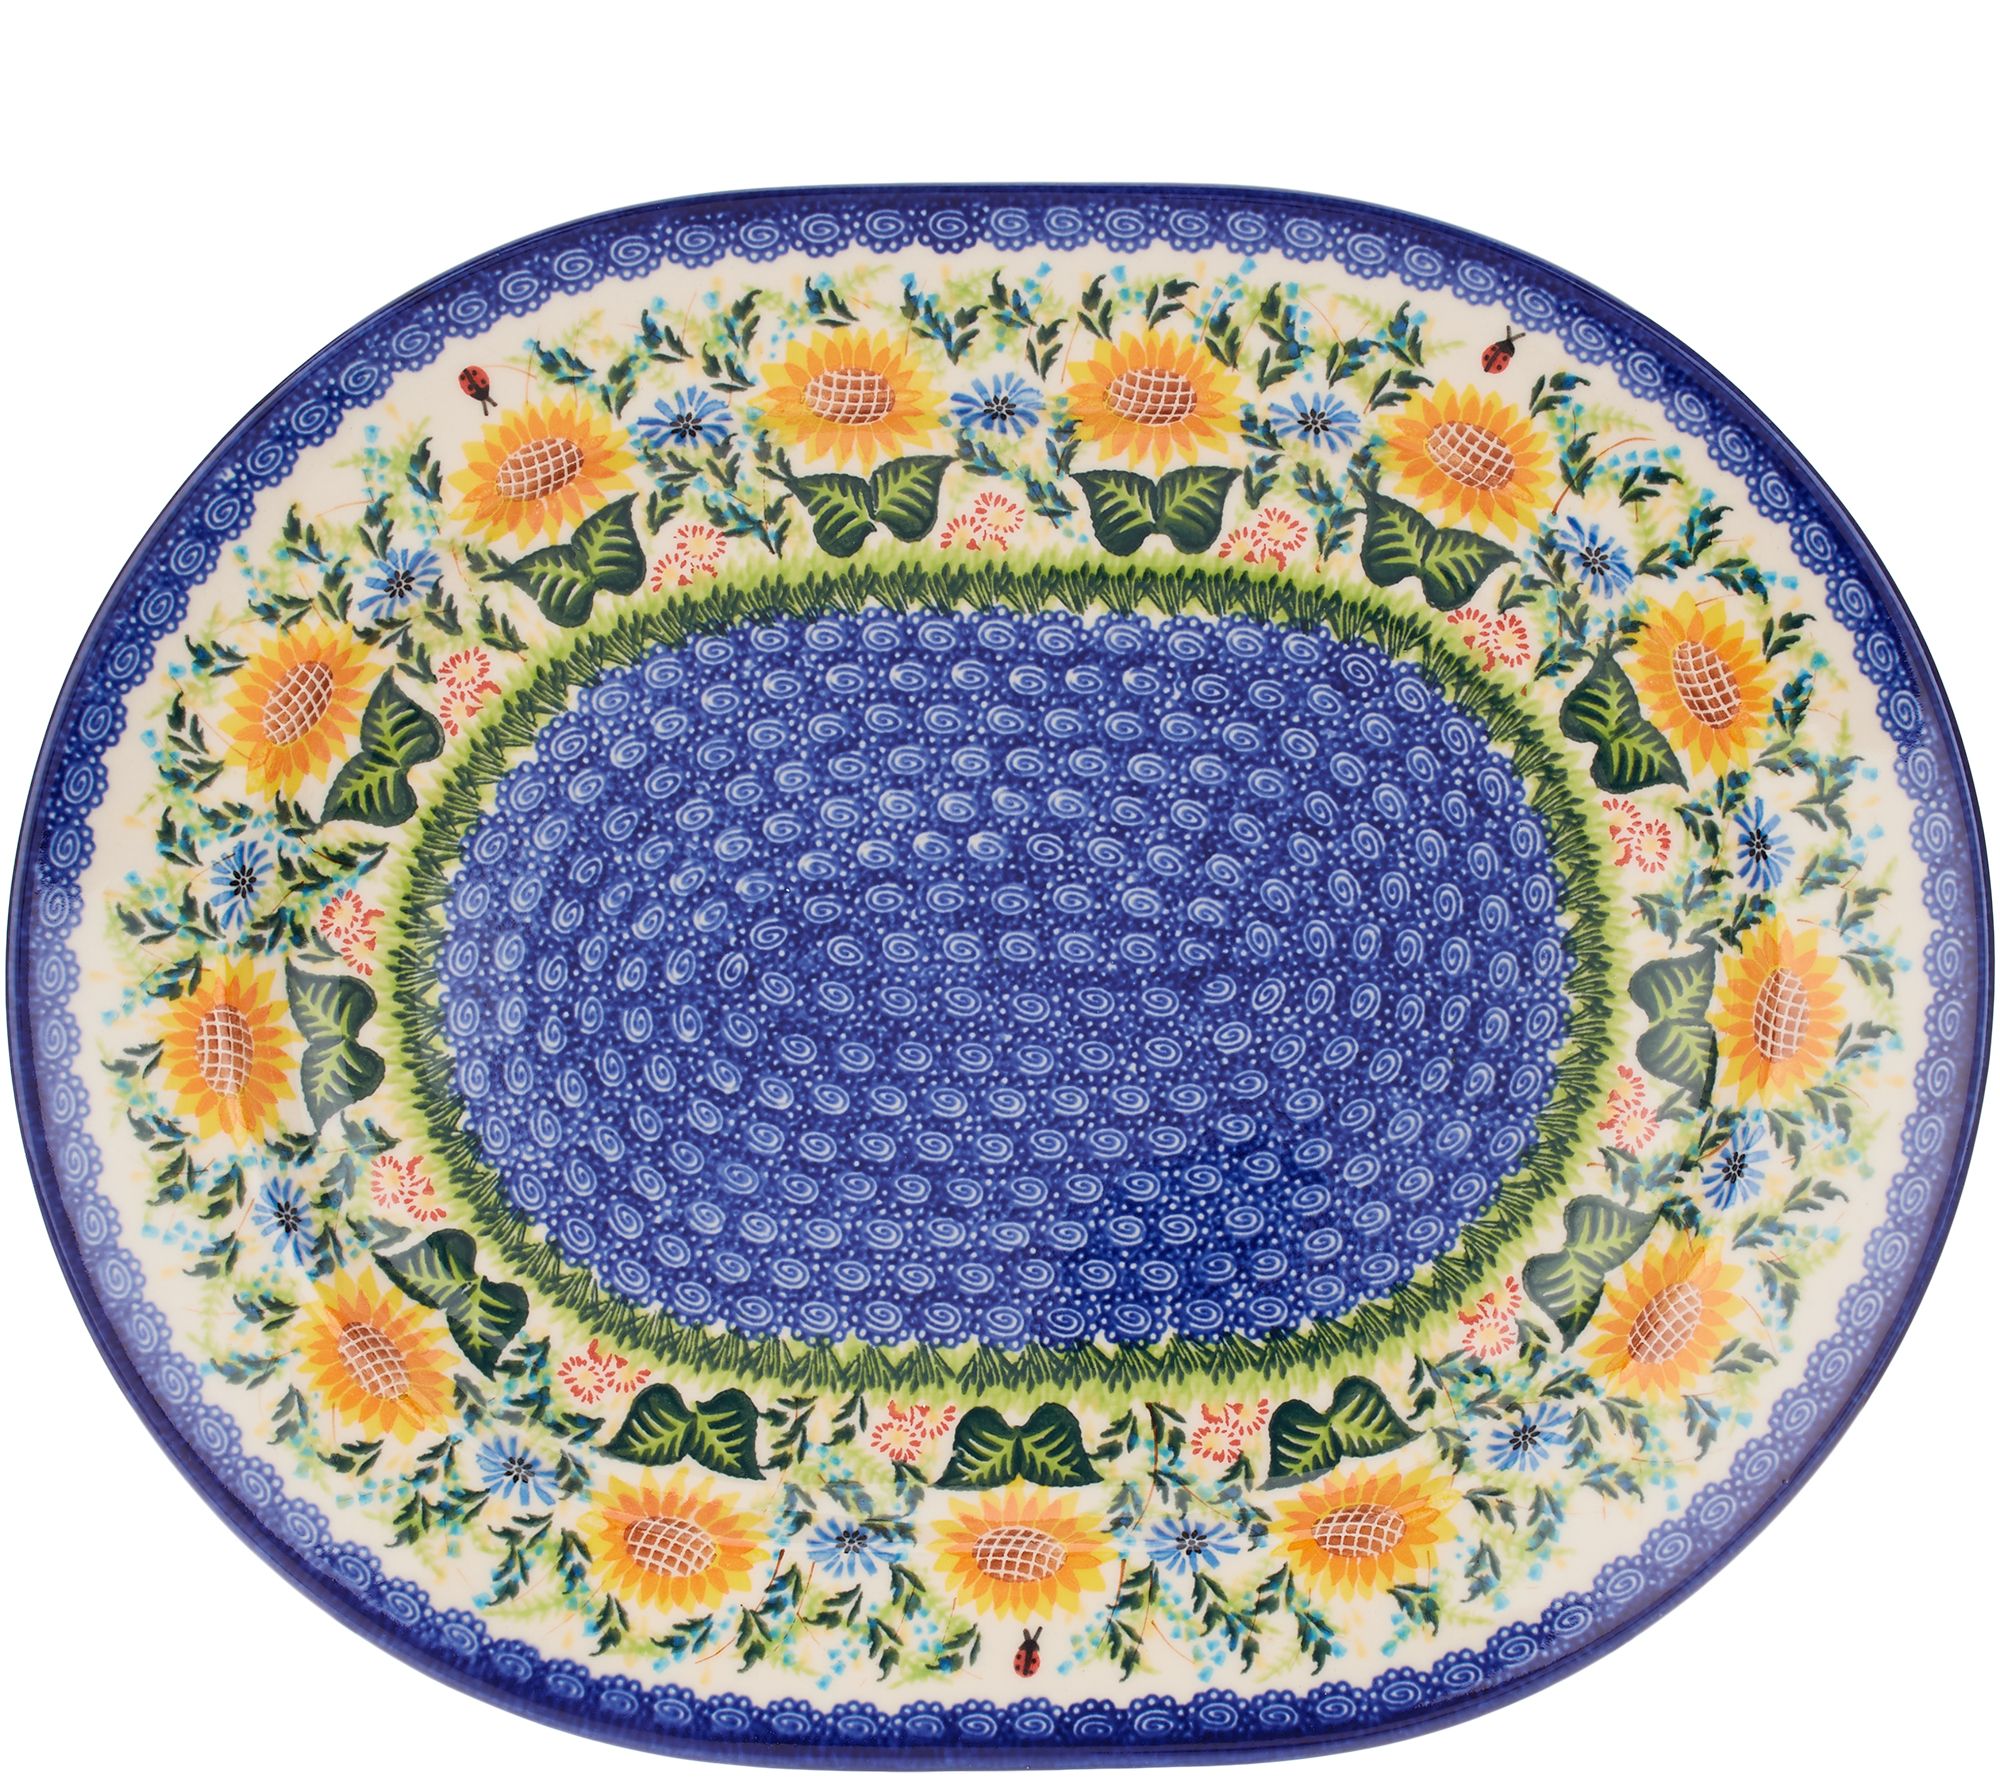 18 x 23 cm 0428 Unique Flowers Plate/Platter from Bolesławiec Ceramics handmade